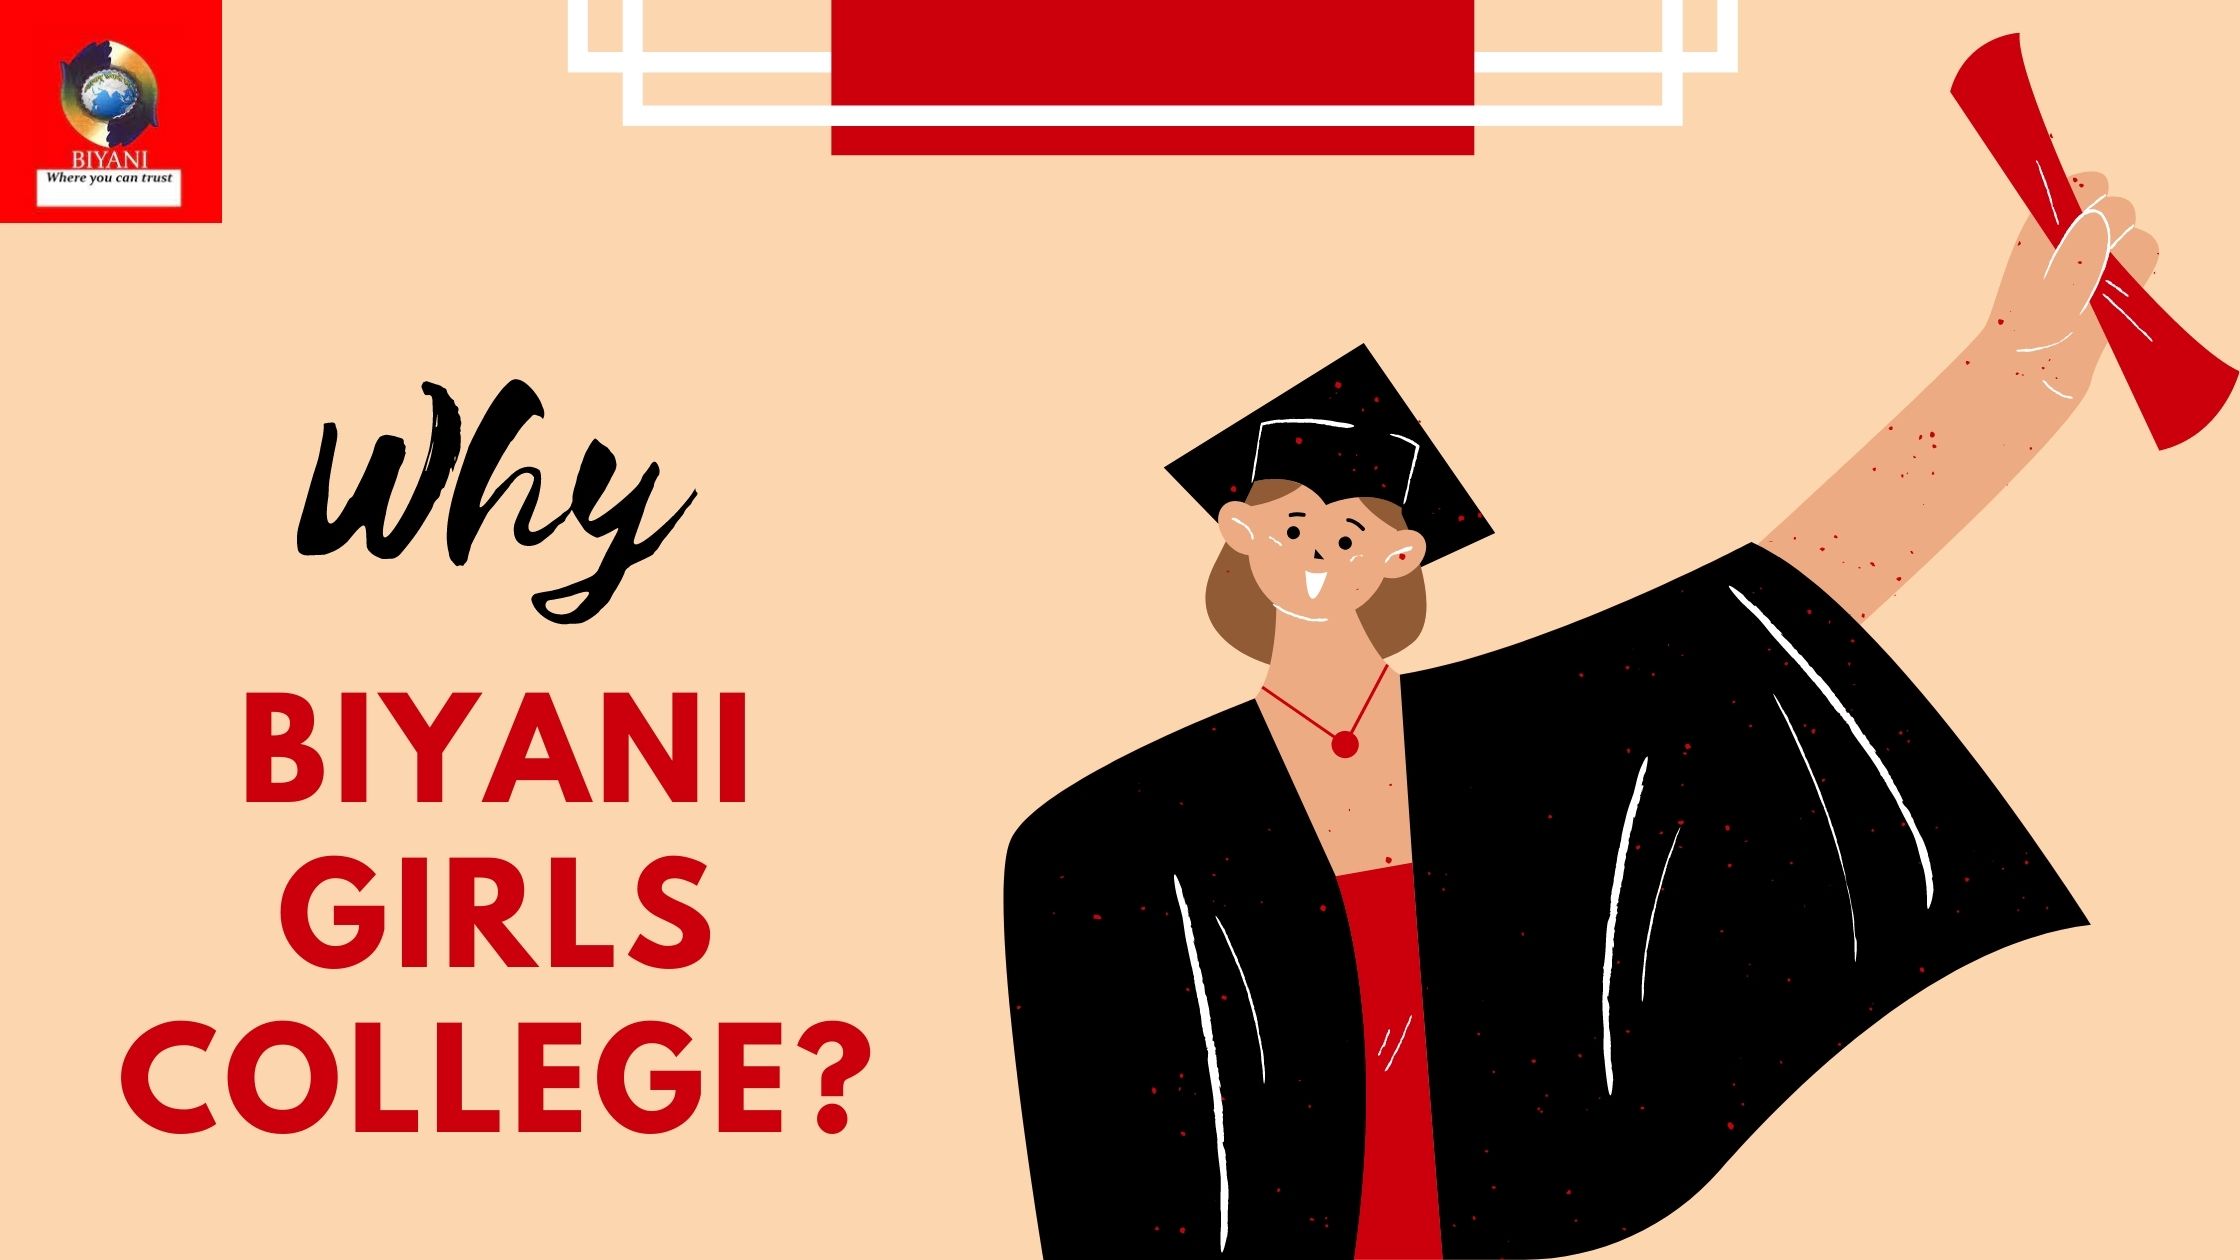 Why biyani girls college